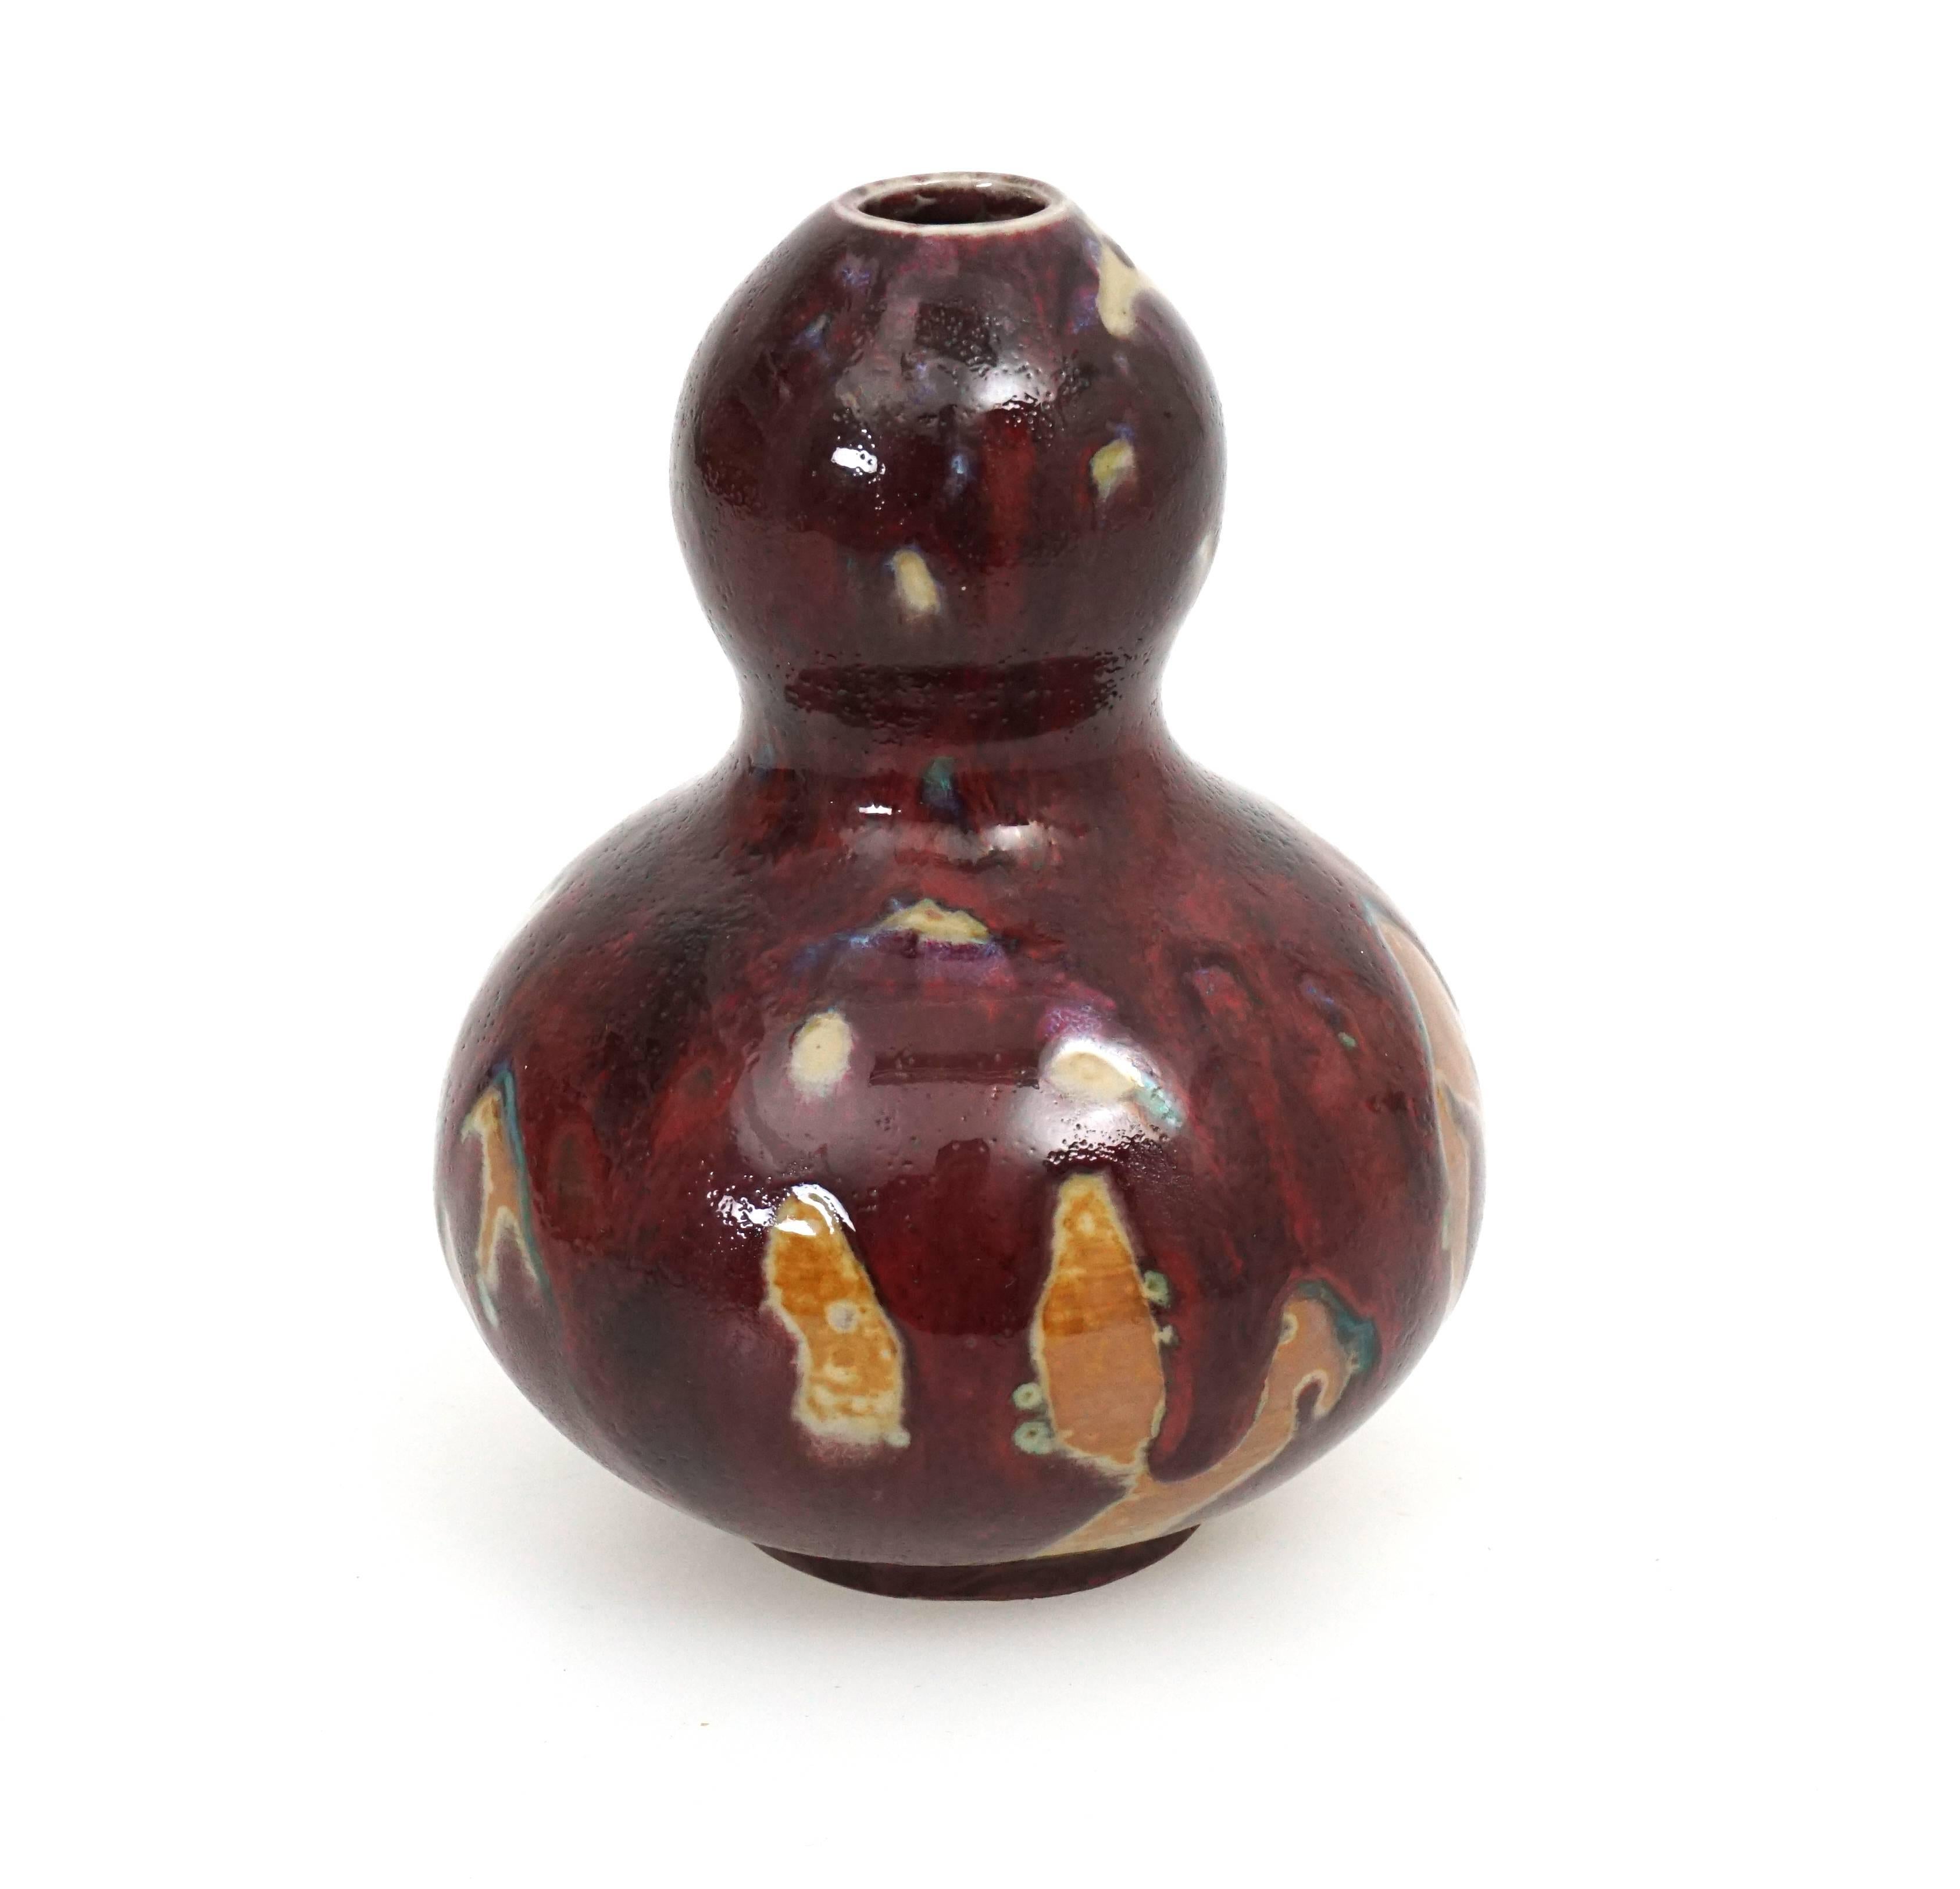 Other Axel Salto, A Calabash-Shaped Stoneware Vase, Royal Copenhagen For Sale